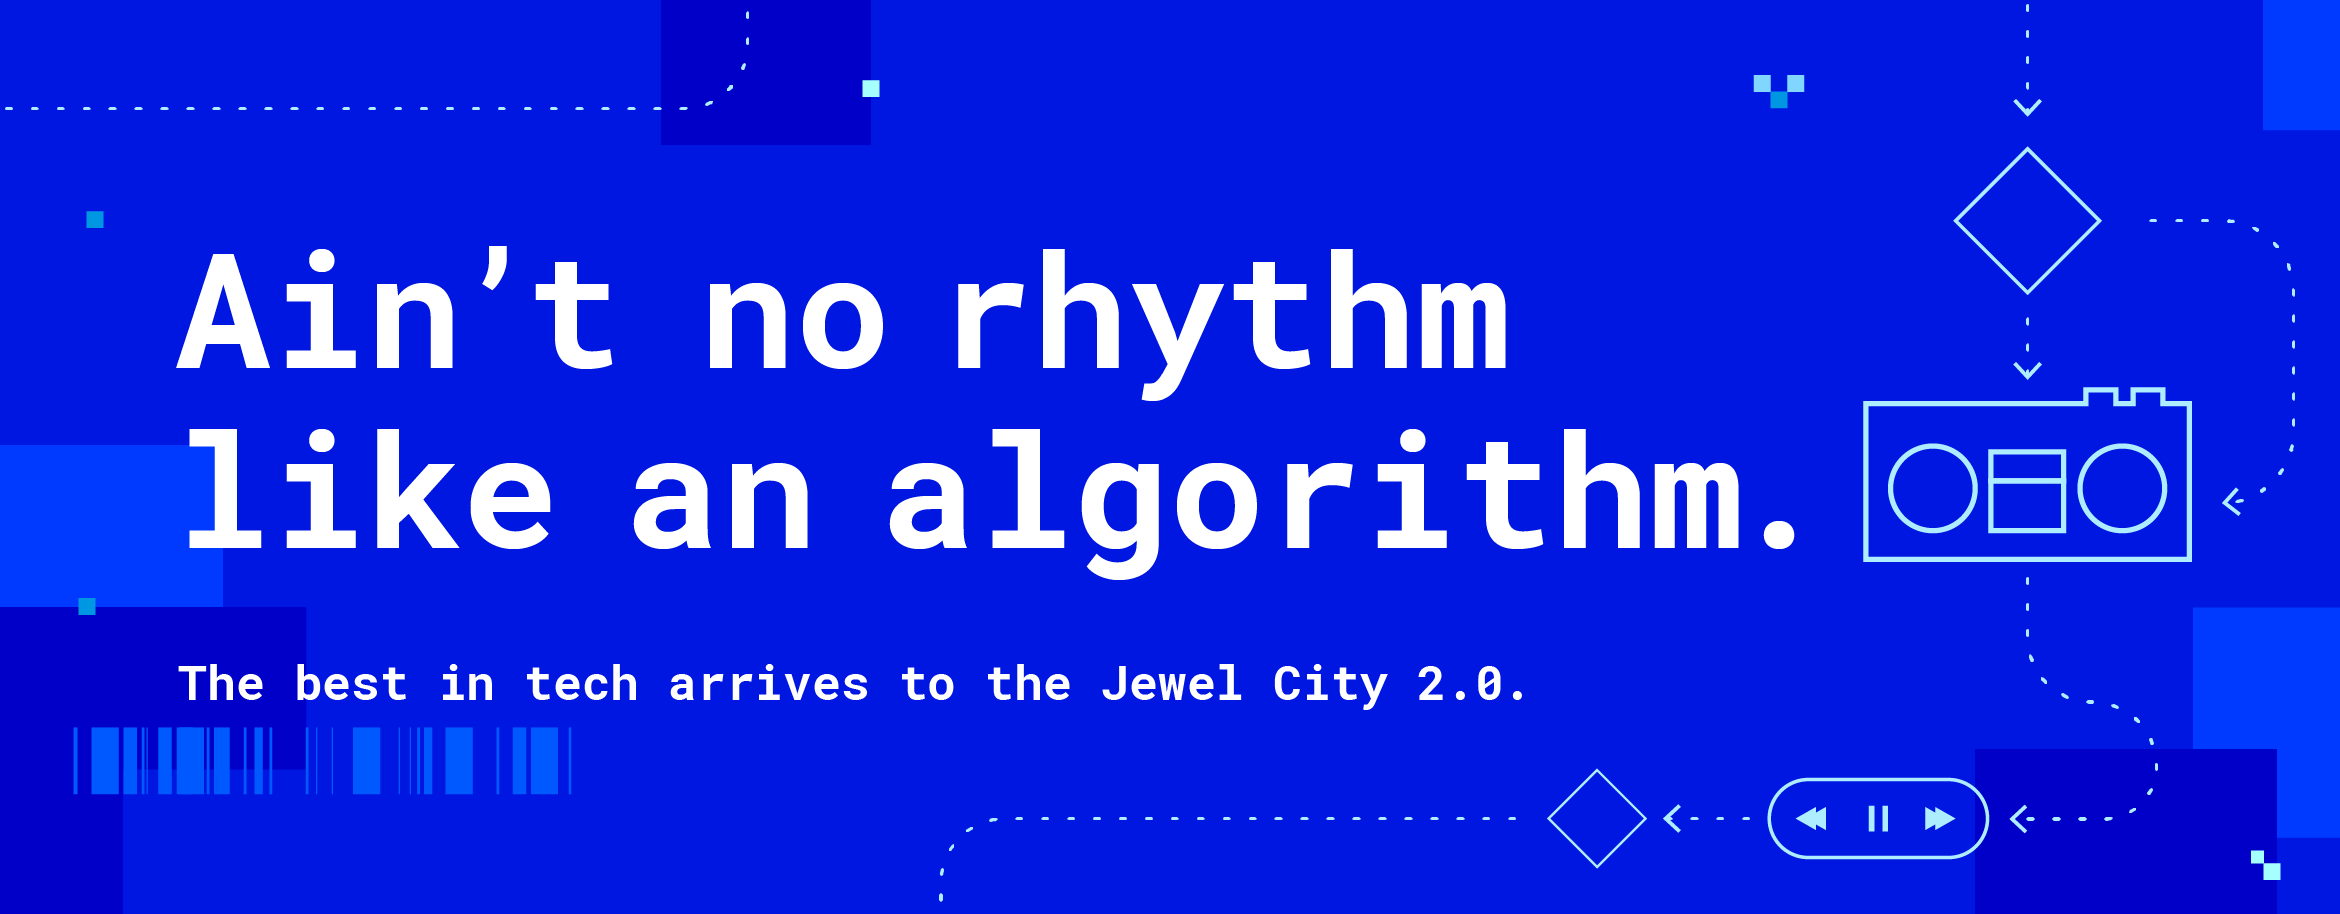 Glendale Tech Week Algorithm digital banner designed by Kilter